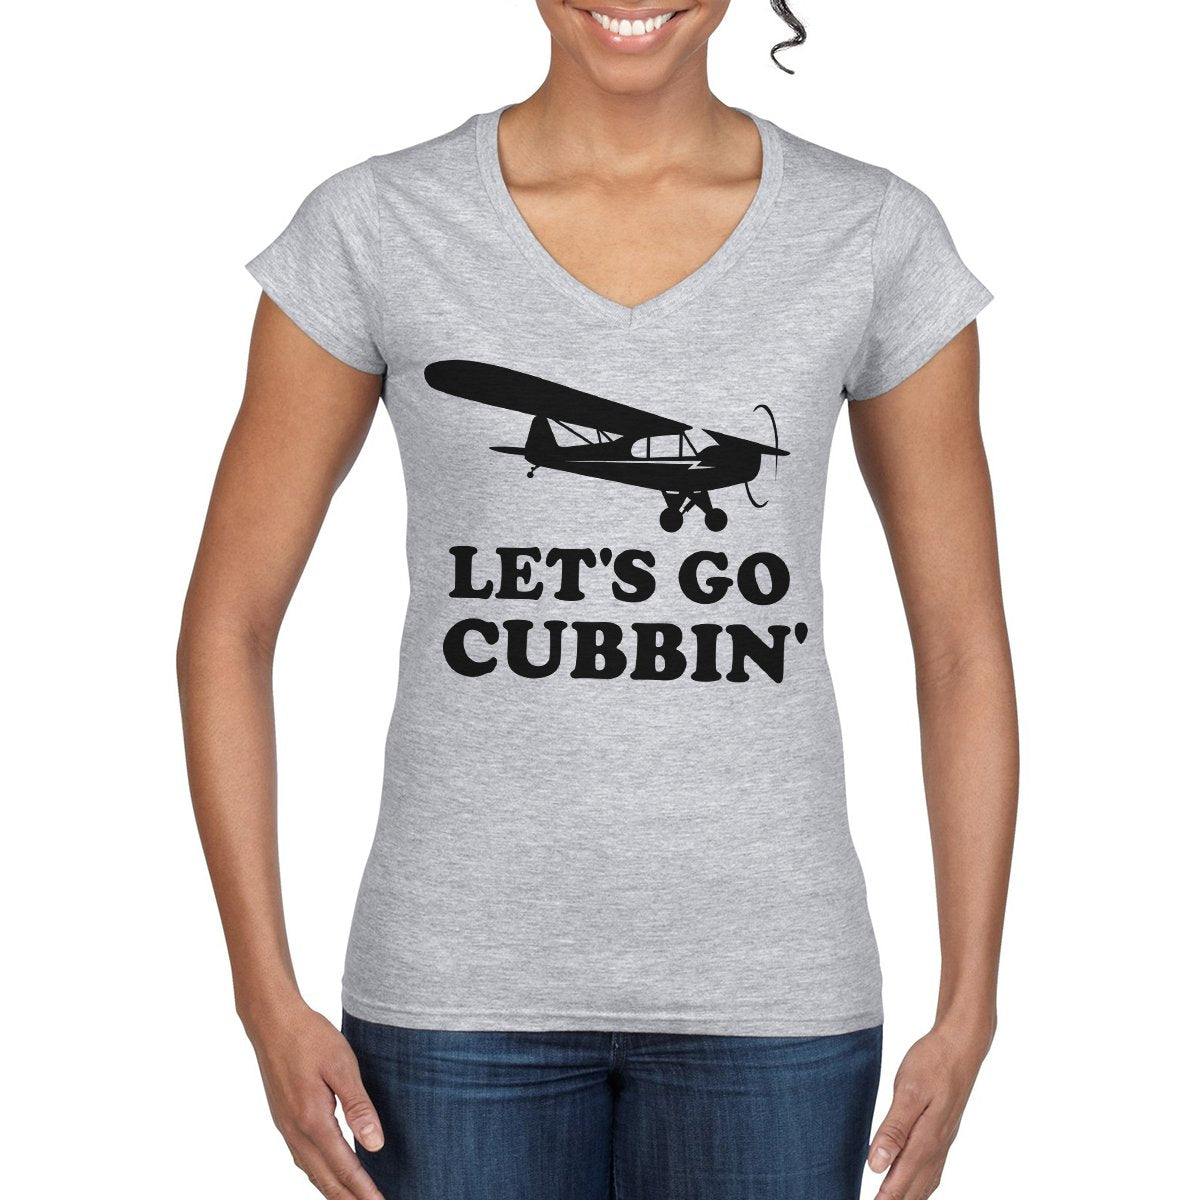 LET'S GO CUBBIN' Women's Semi-Fitted T-Shirt